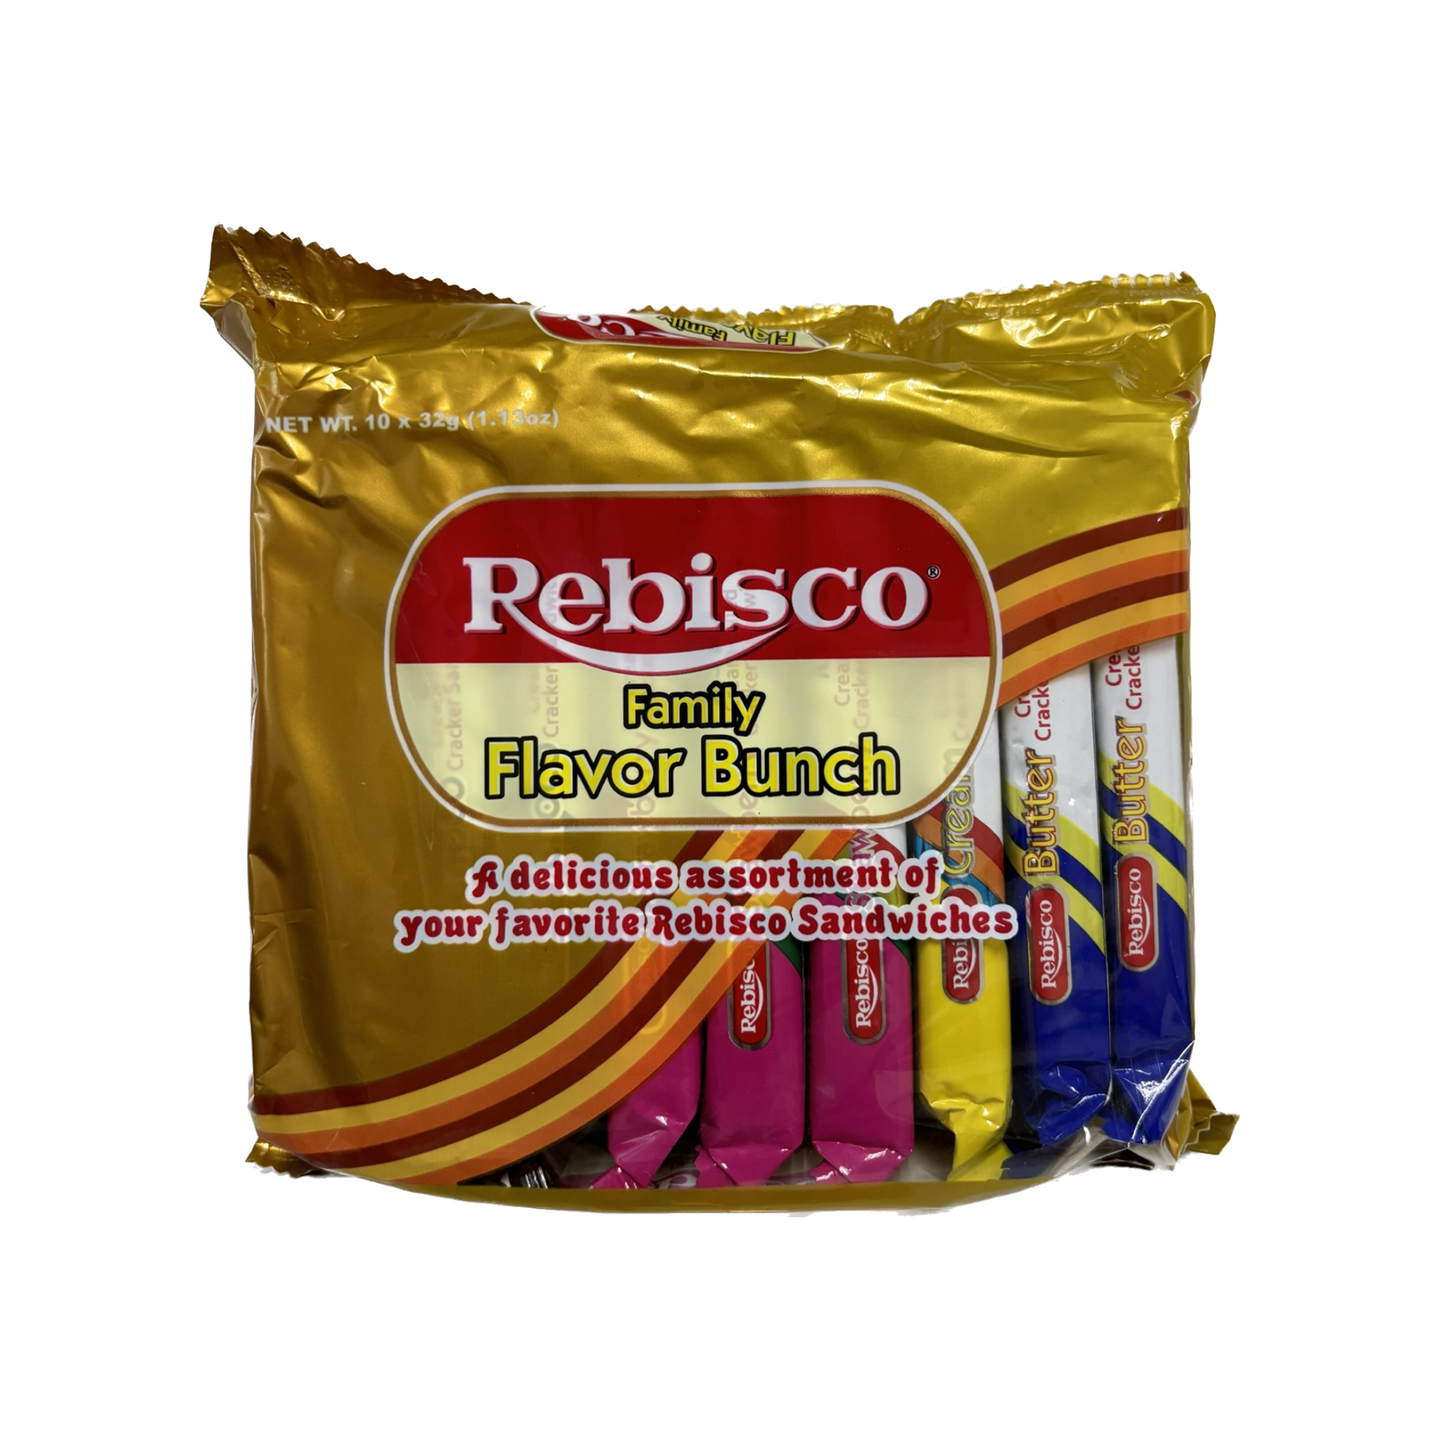 Rebisco Family Flavor Bunch (32g x 10 packs)